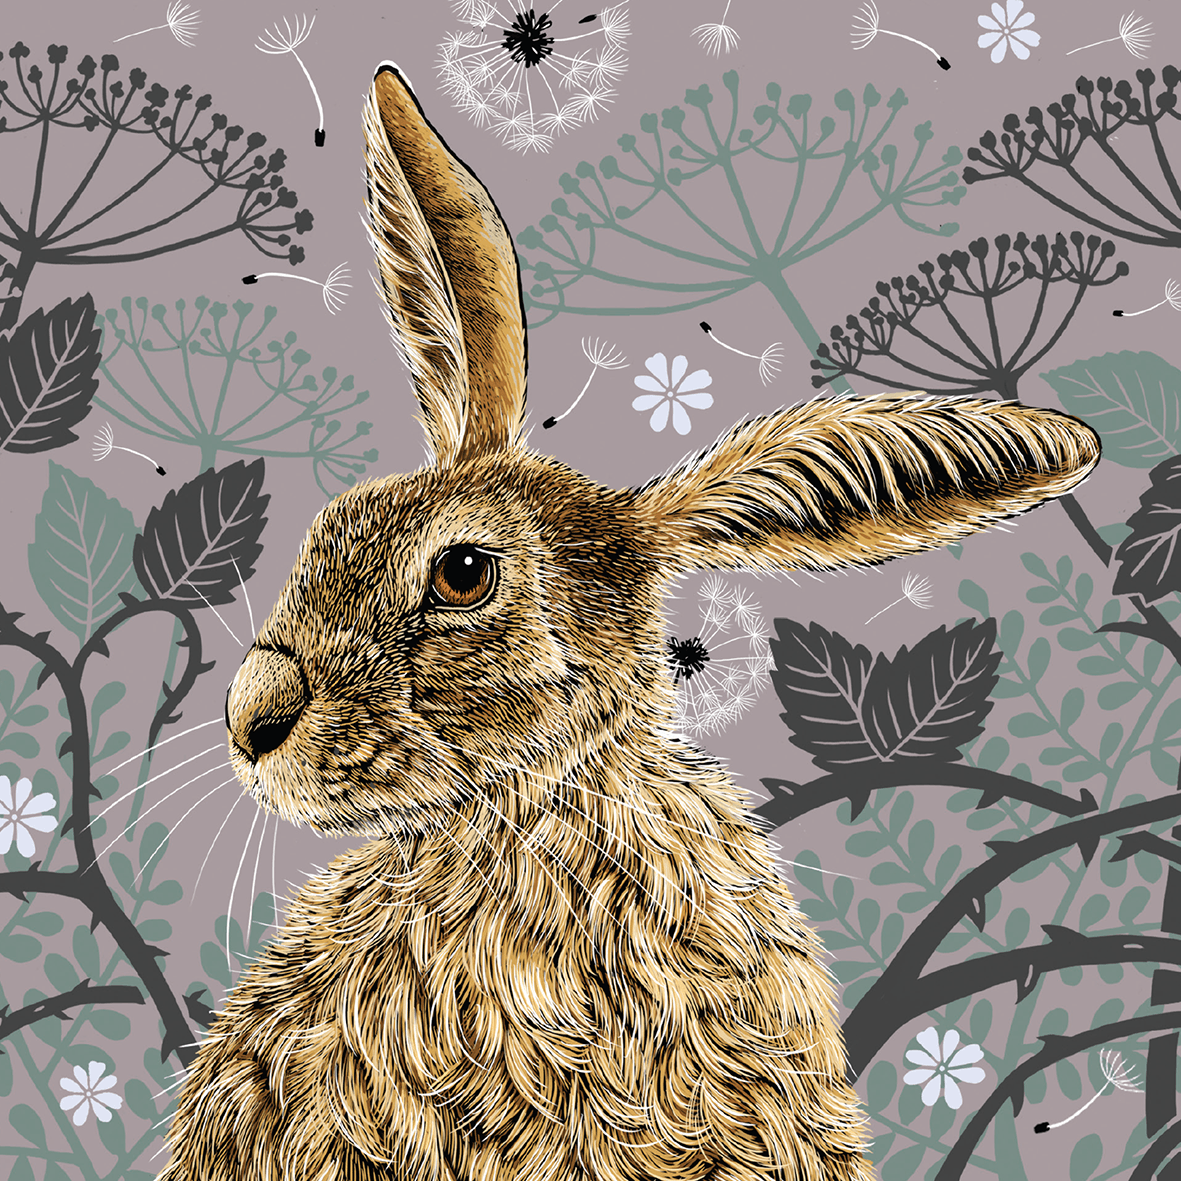 Decorative Hare Greeting Card - Clay - Fox &amp; Boo